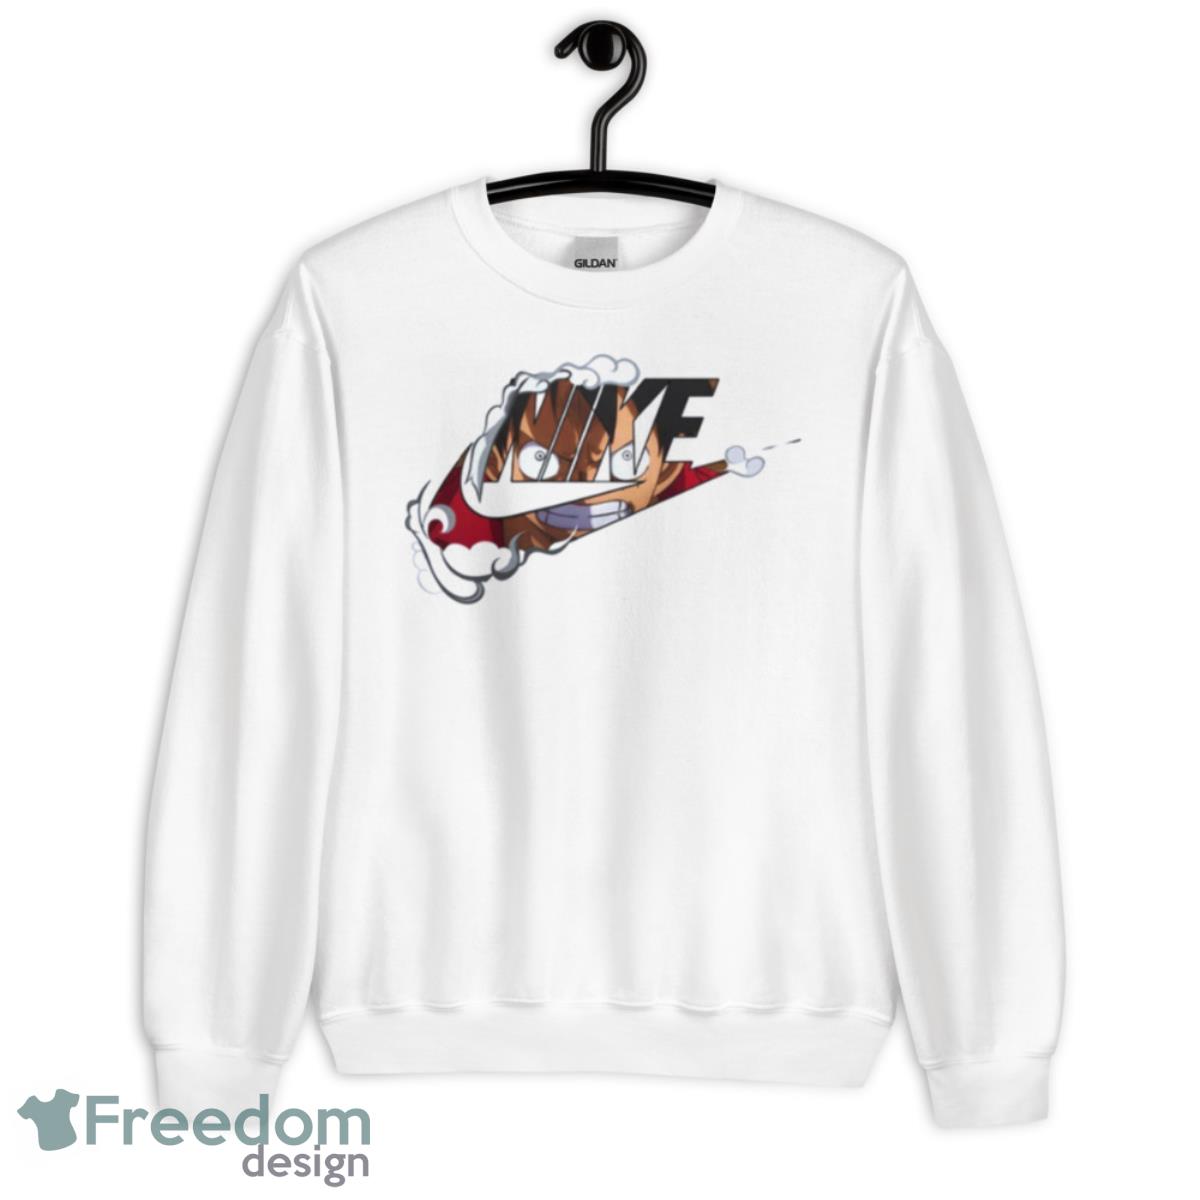 Luffy’s Eyes Mi Nike Logo One Piece Shirt - Freedomdesign